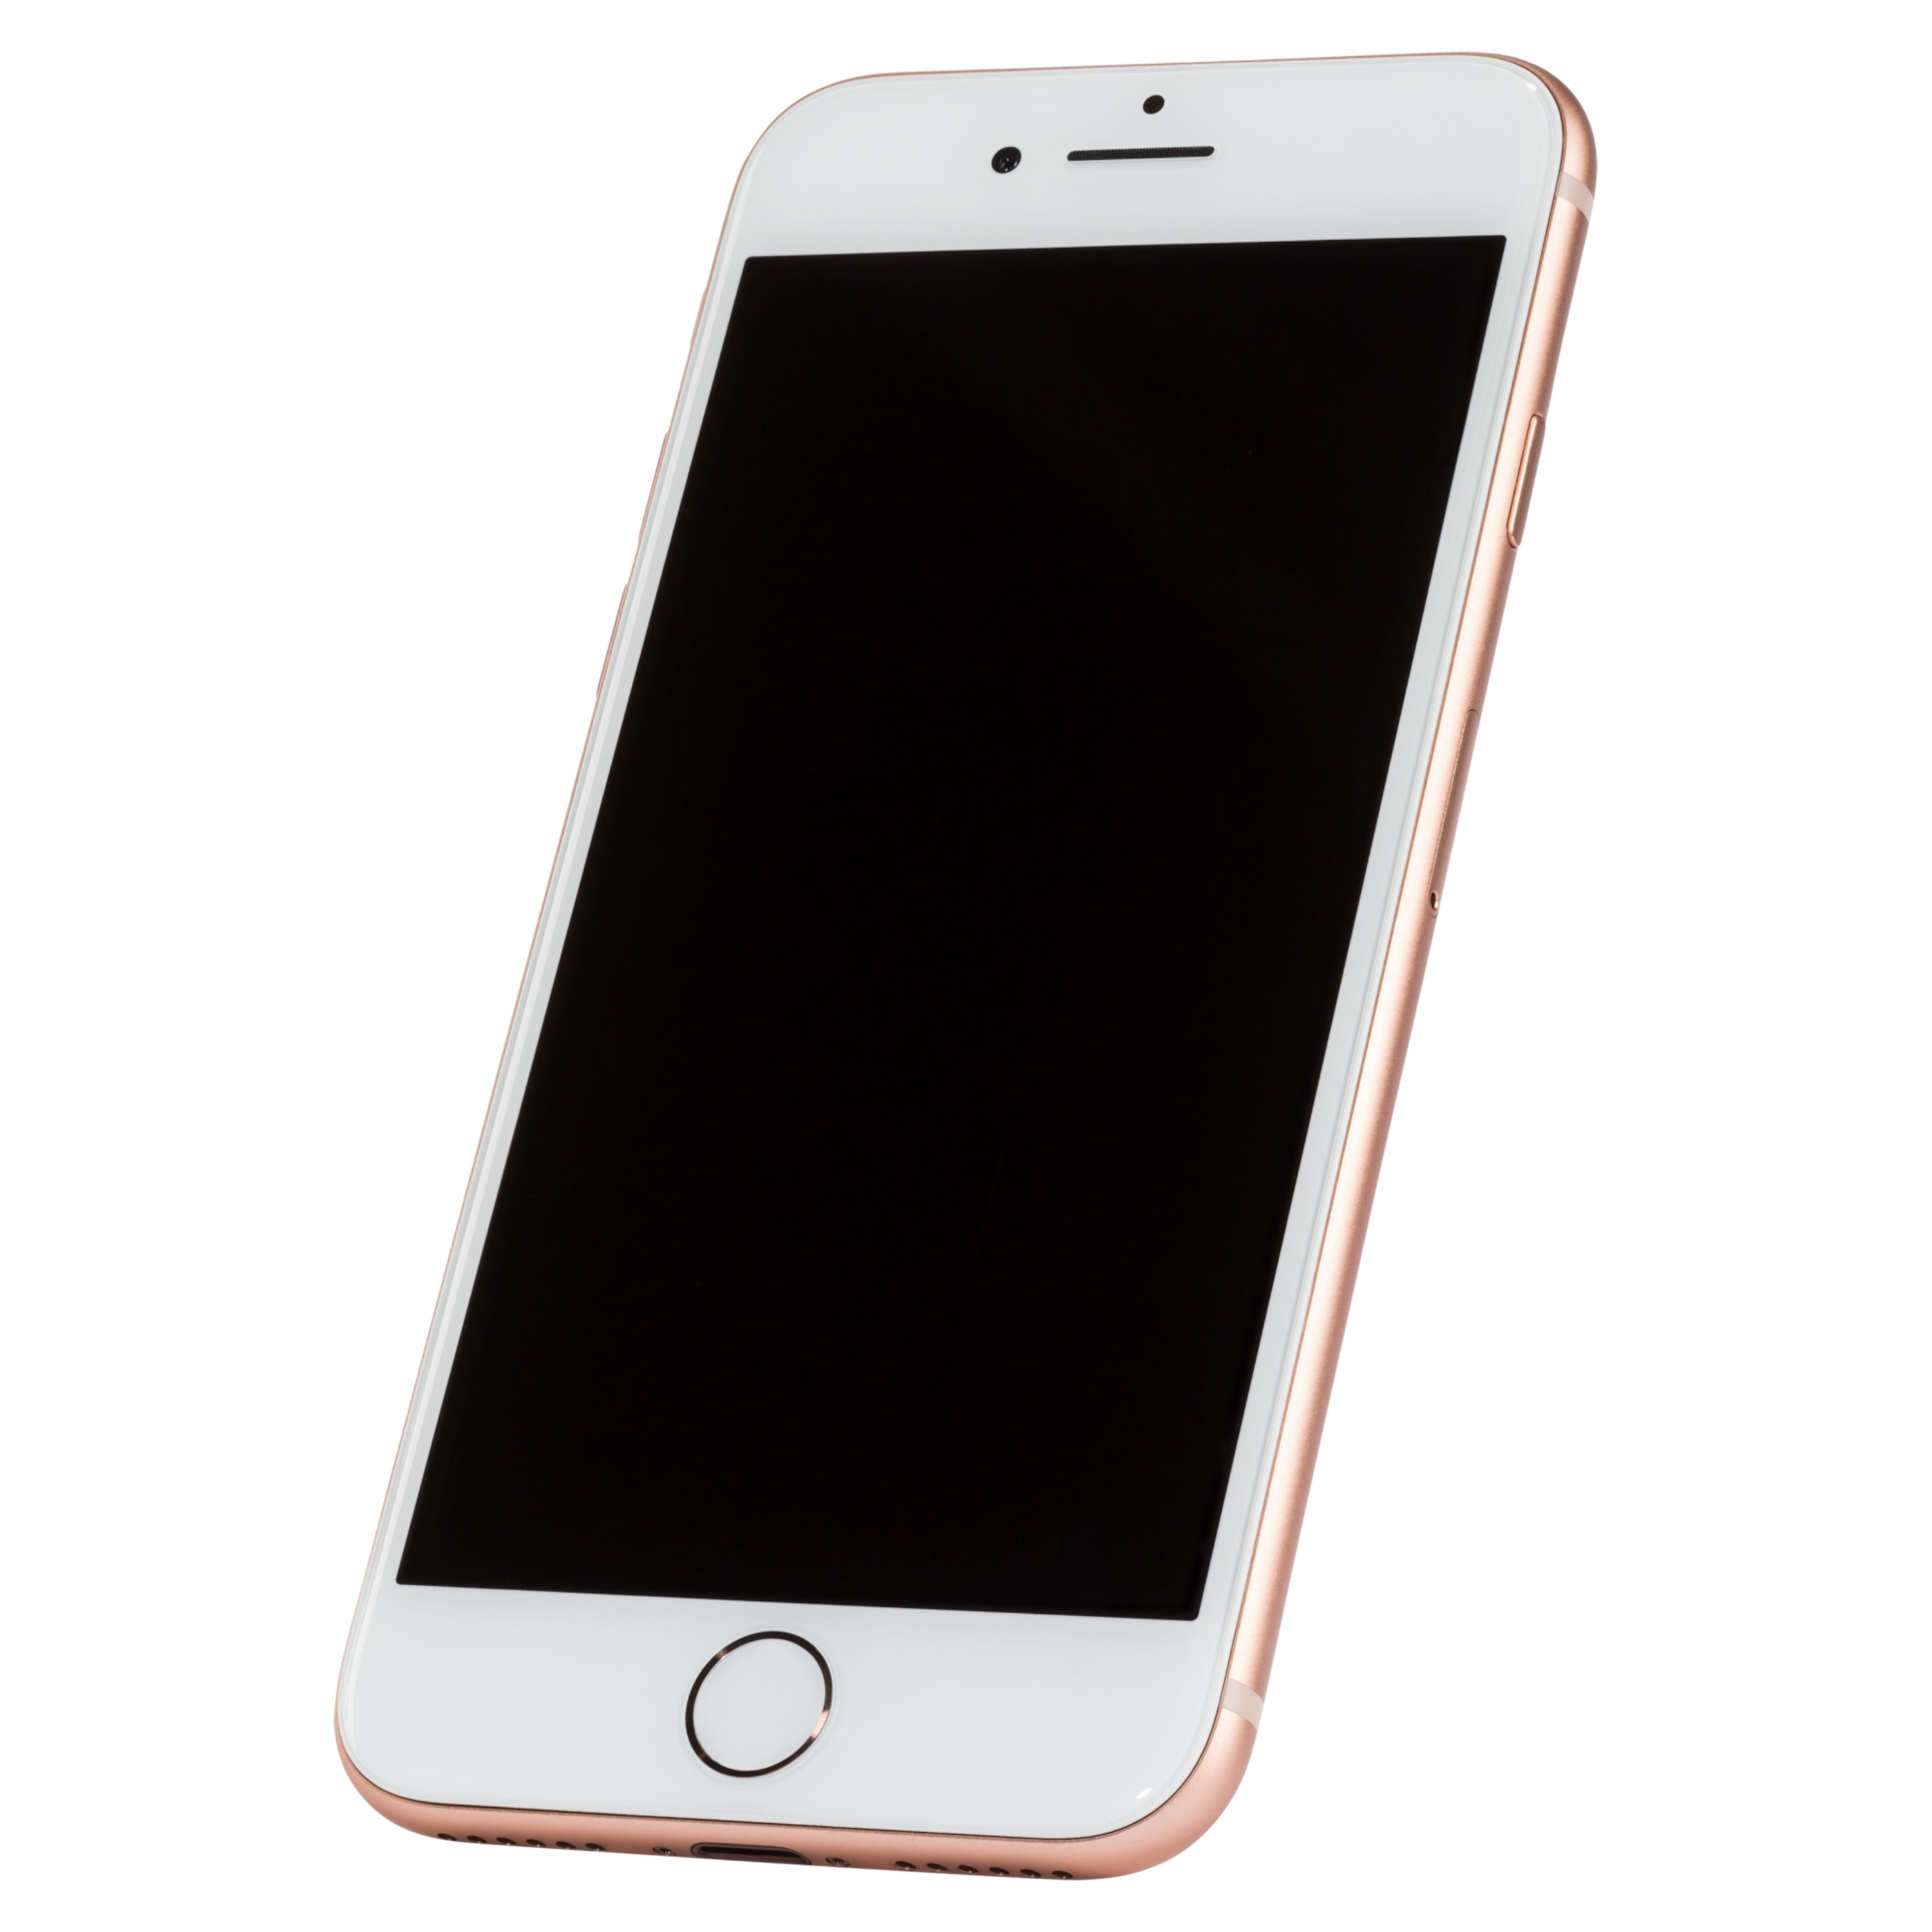 APPLE iPhone 8 64 GB, gold (generalüberholt)